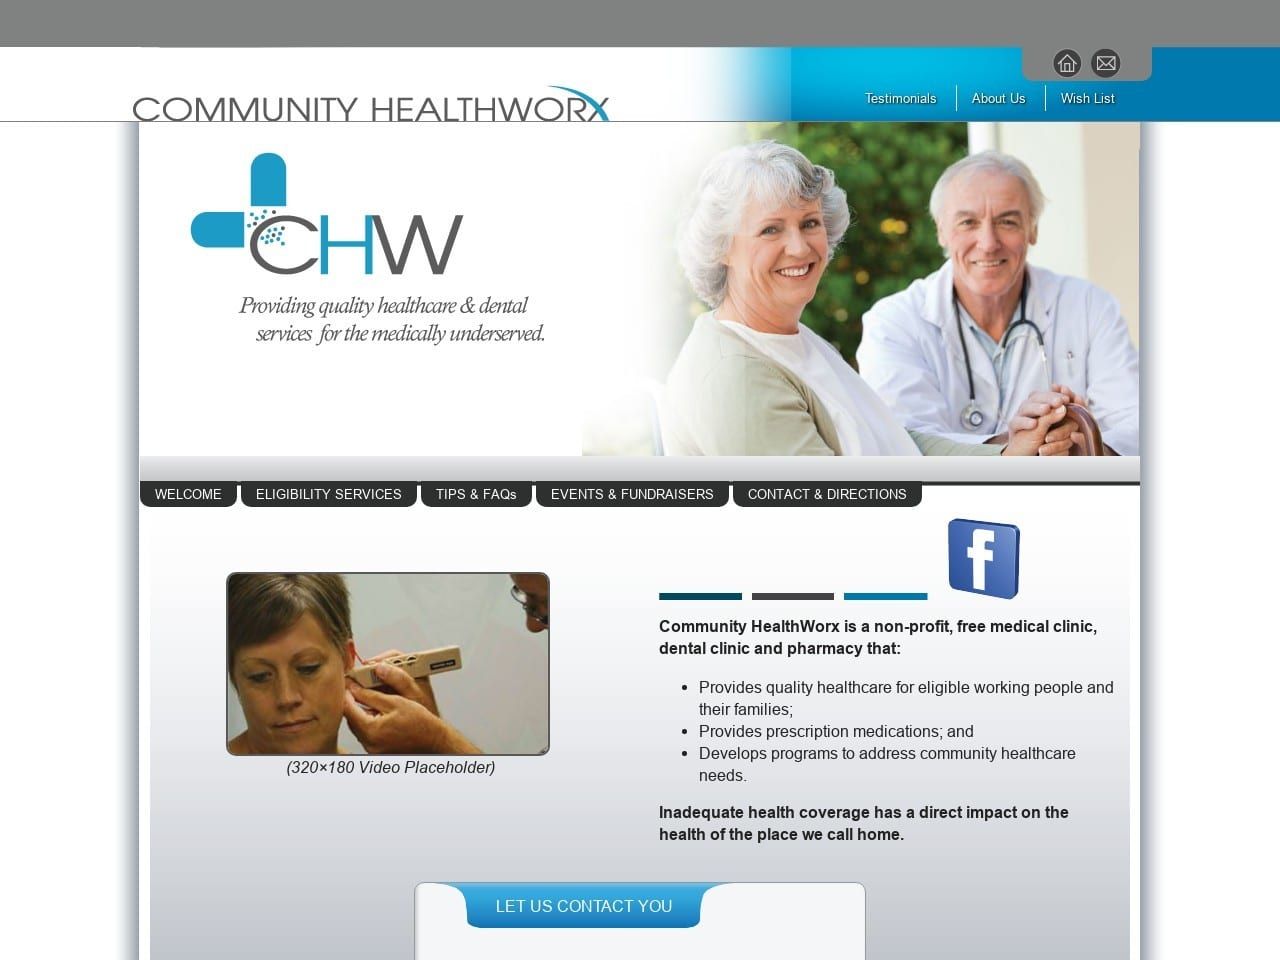 Community Healthworx Website Screenshot from healthworx.org